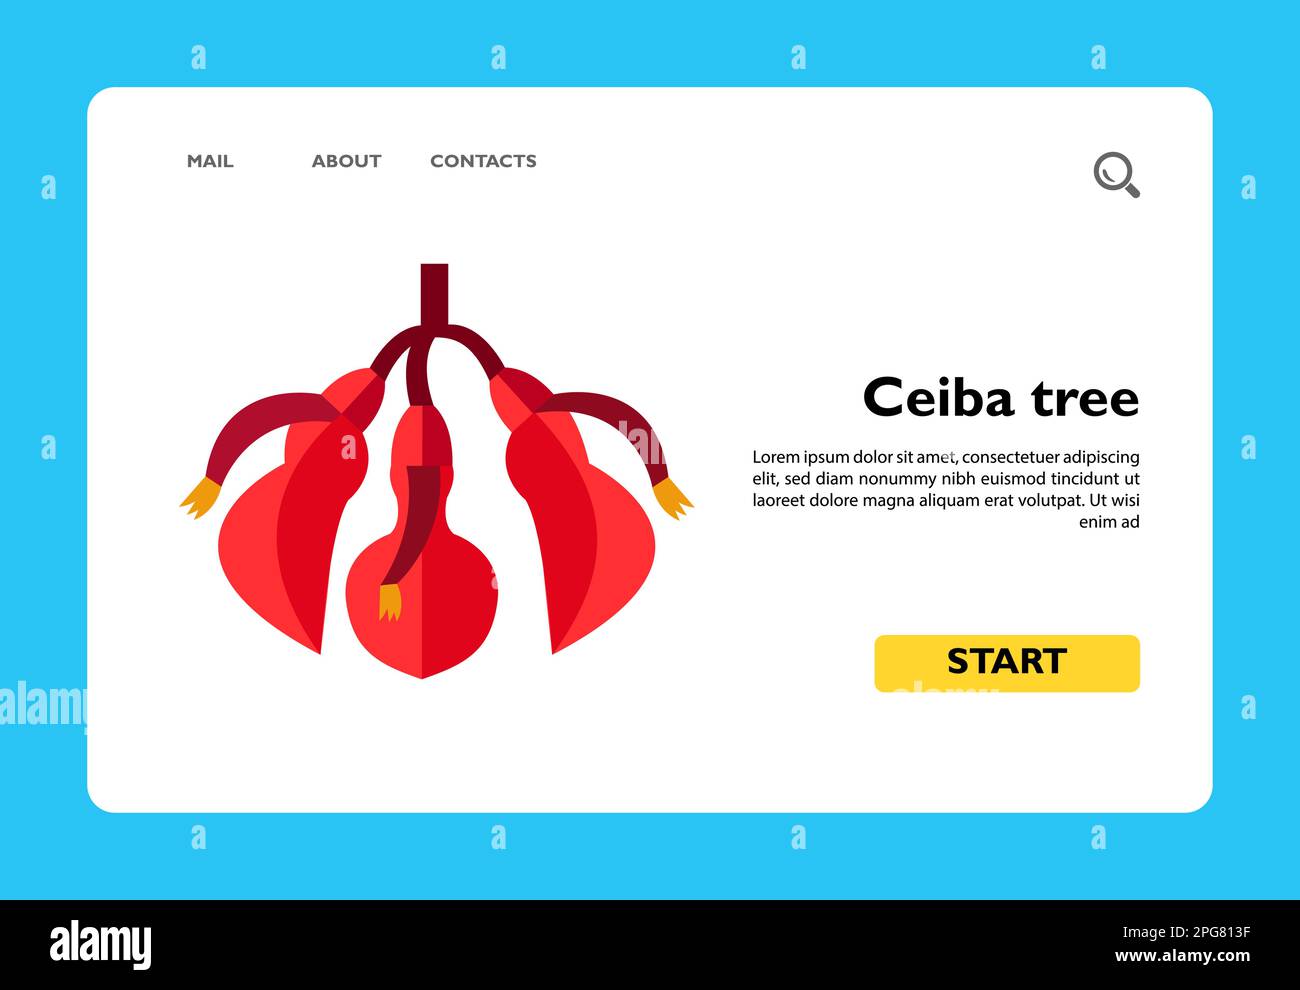 Ceiba tree vector icon Stock Vector